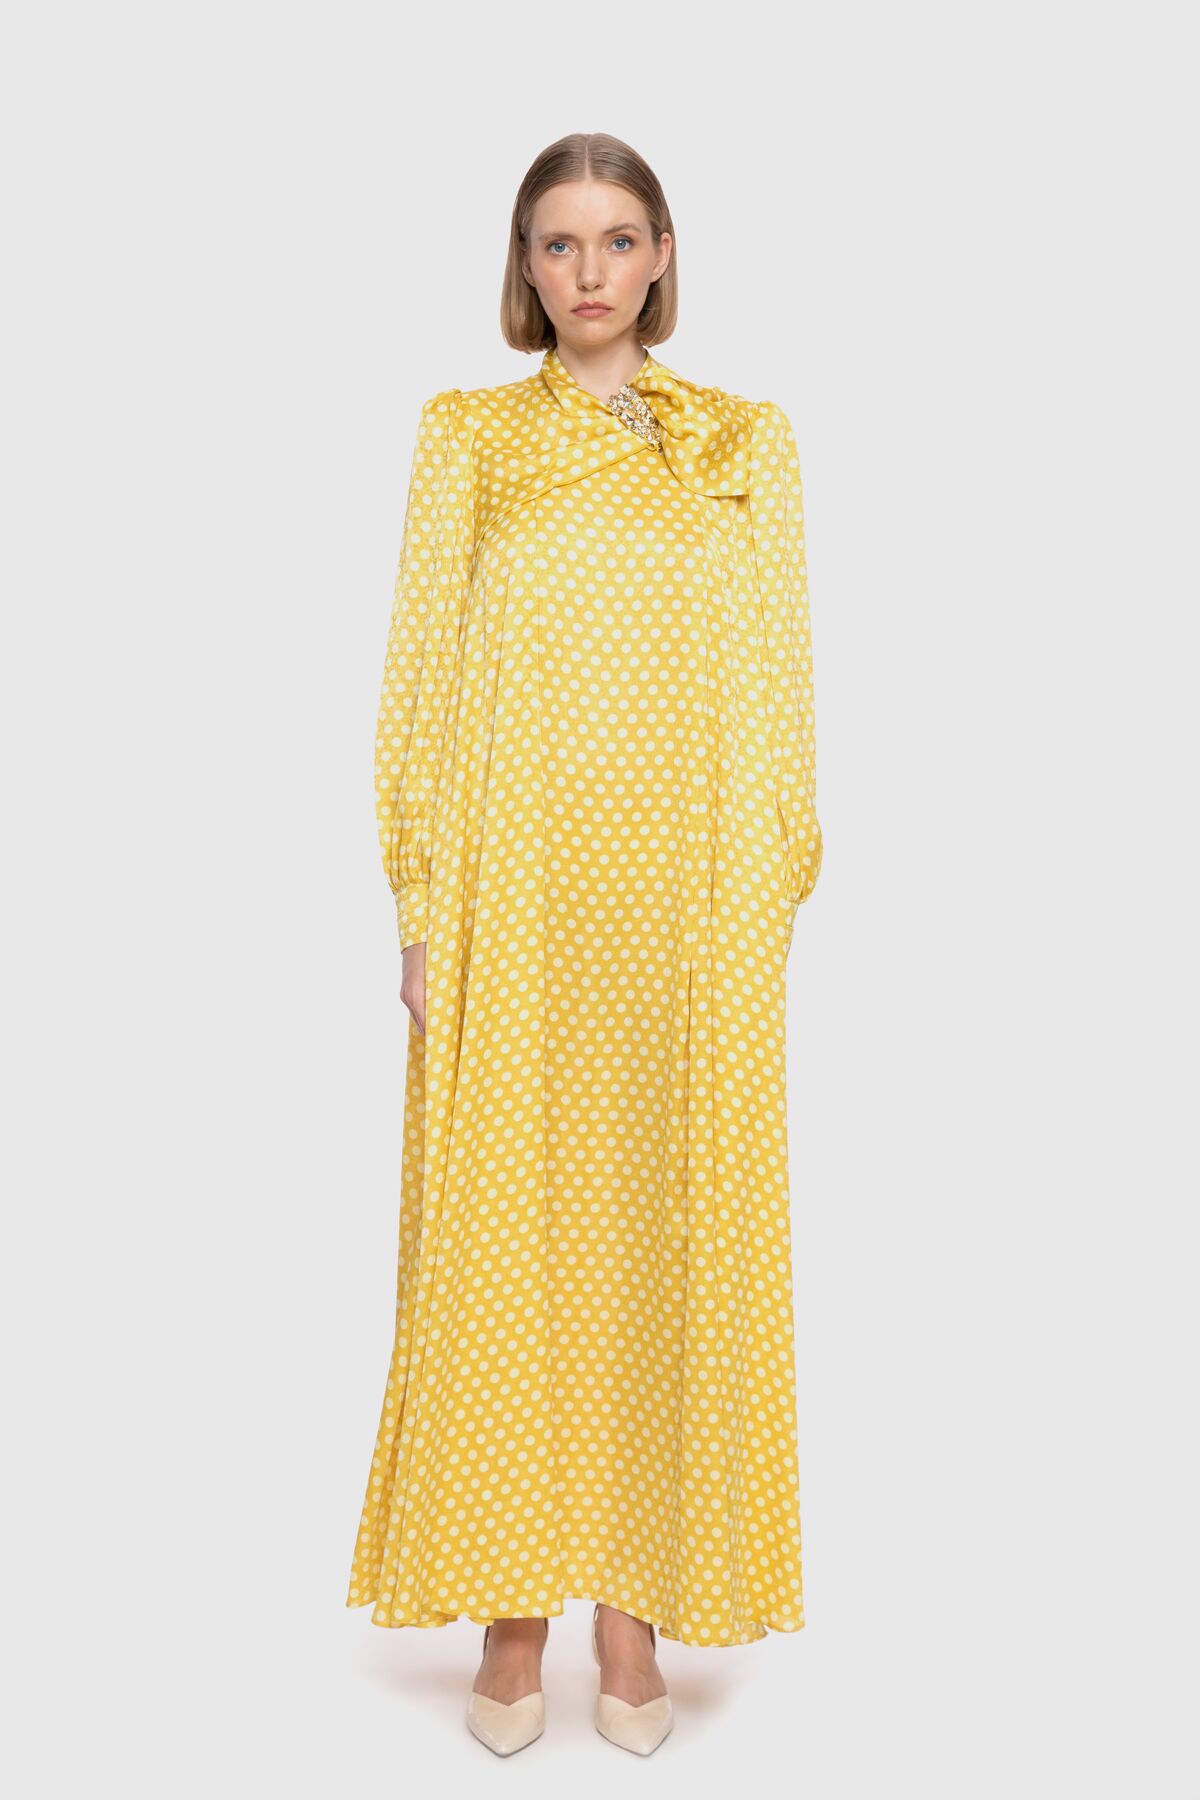  GIZIA - Collar Detailed Long Polka Dot Patterned Yellow Dress